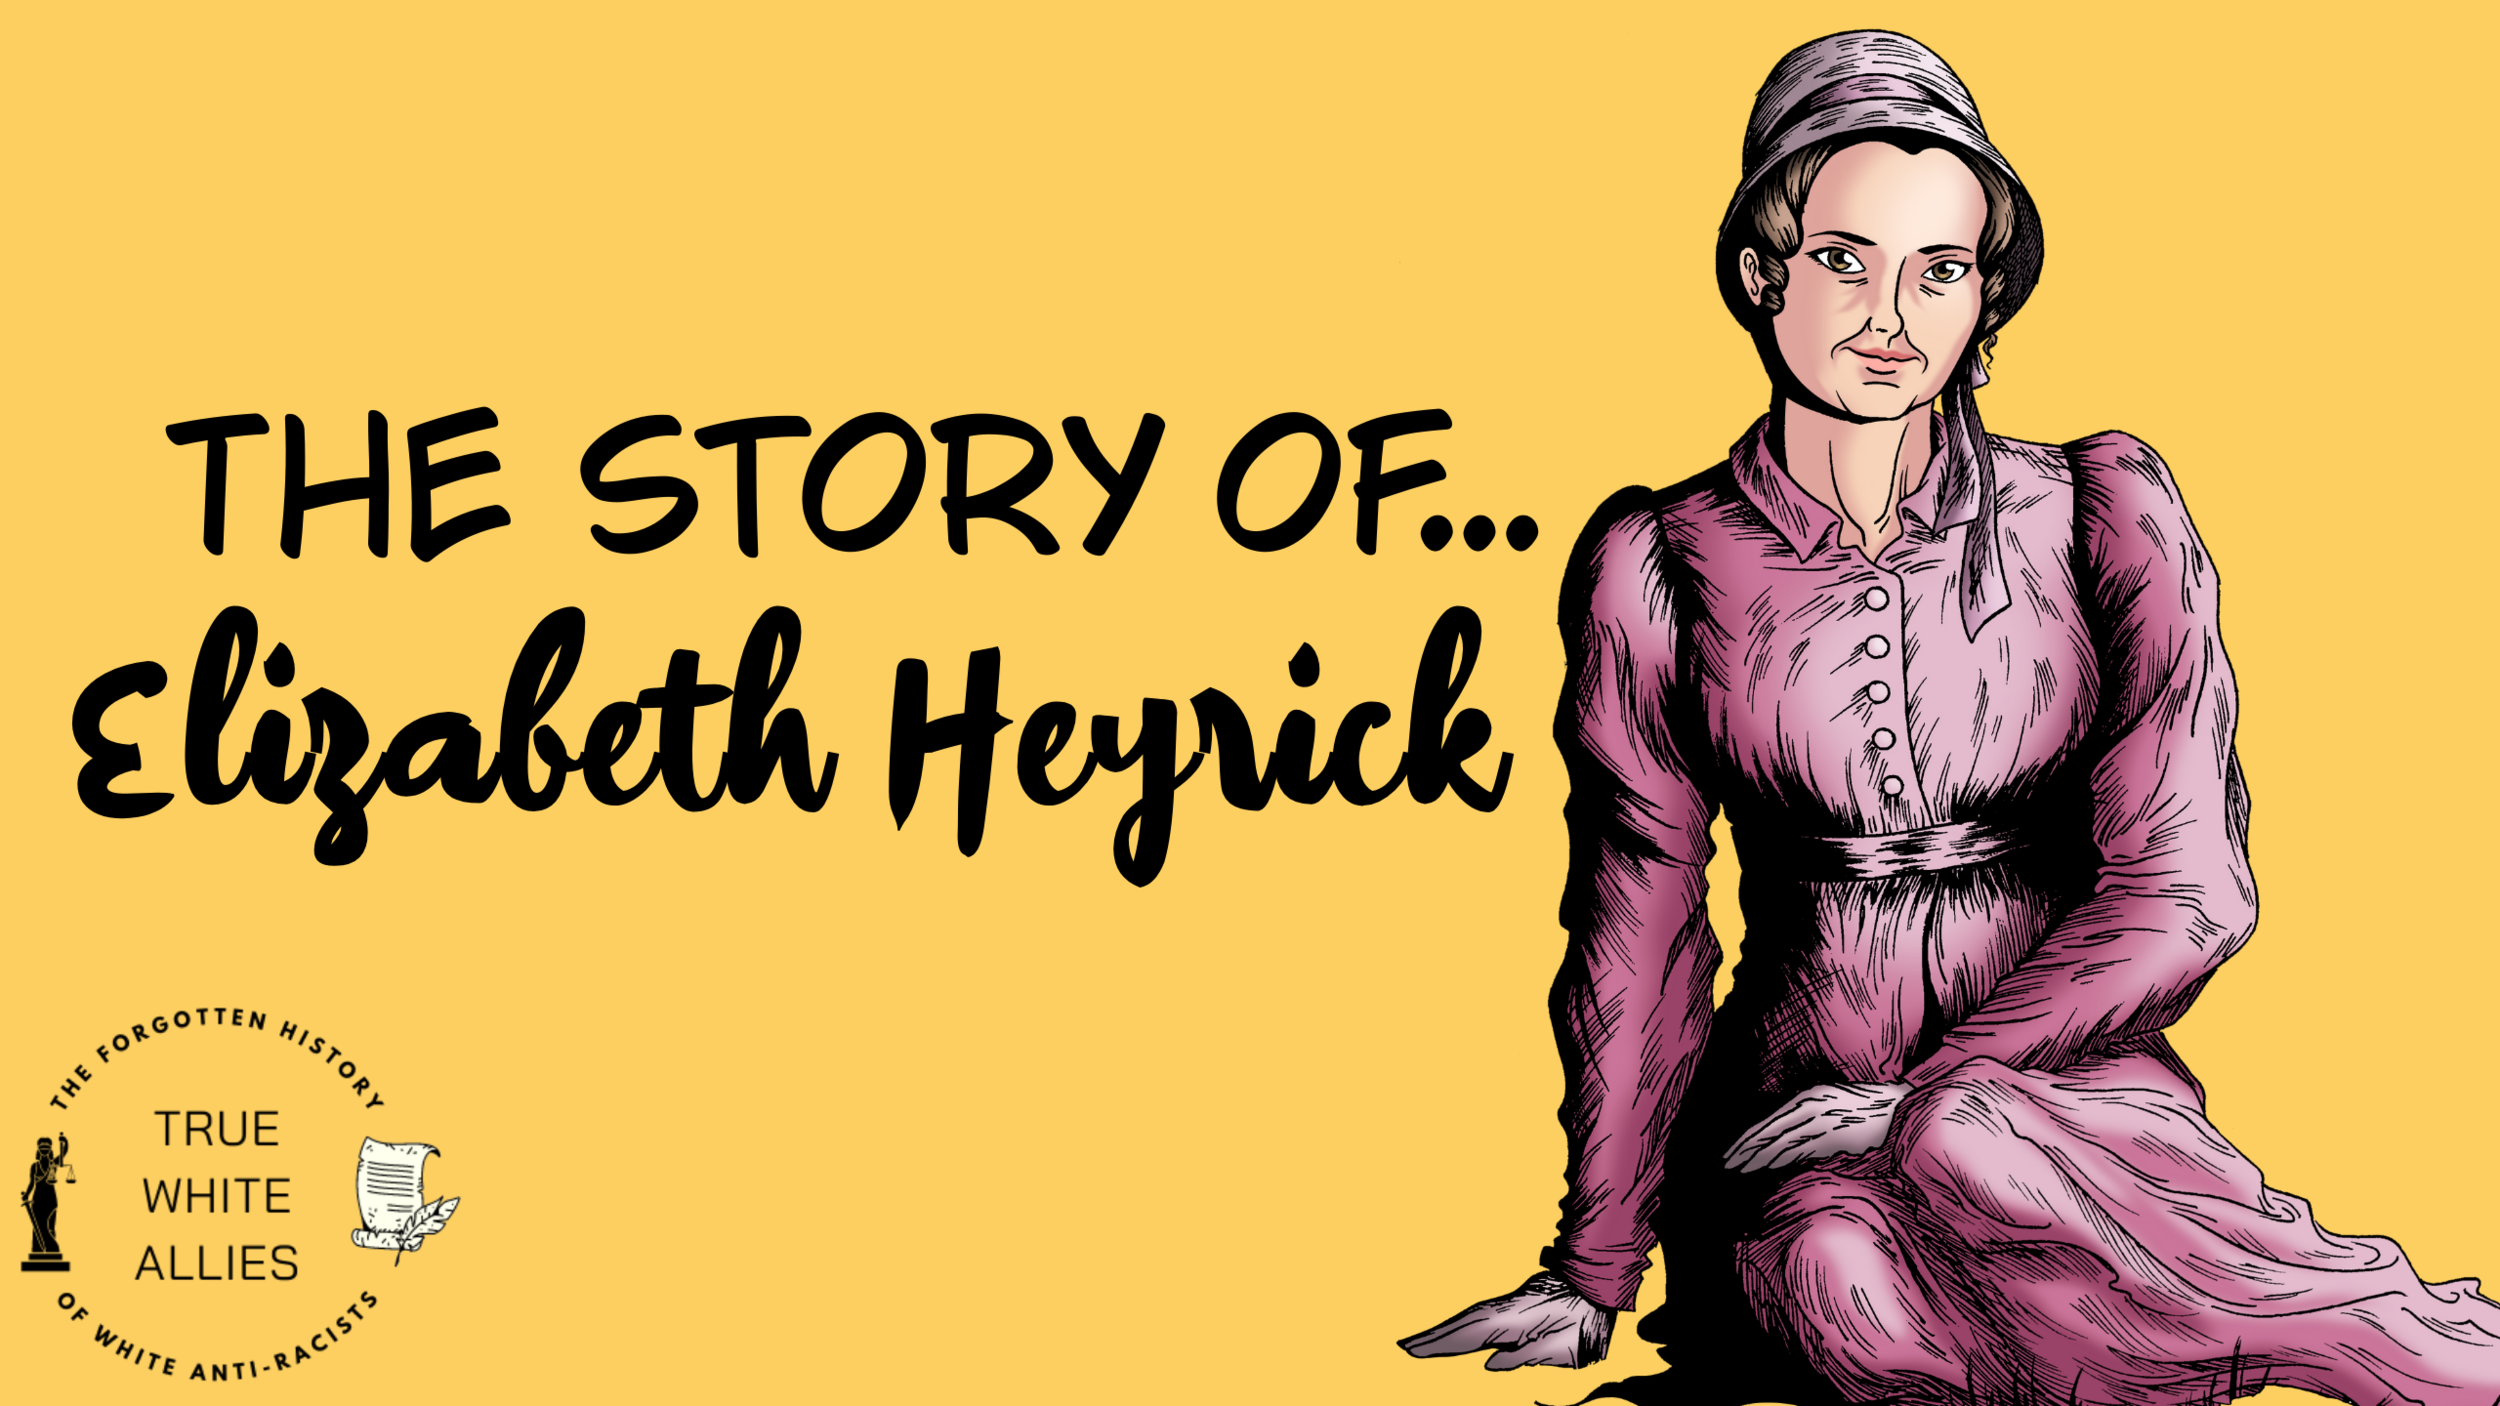 The Story of Elizabeth Heyrick